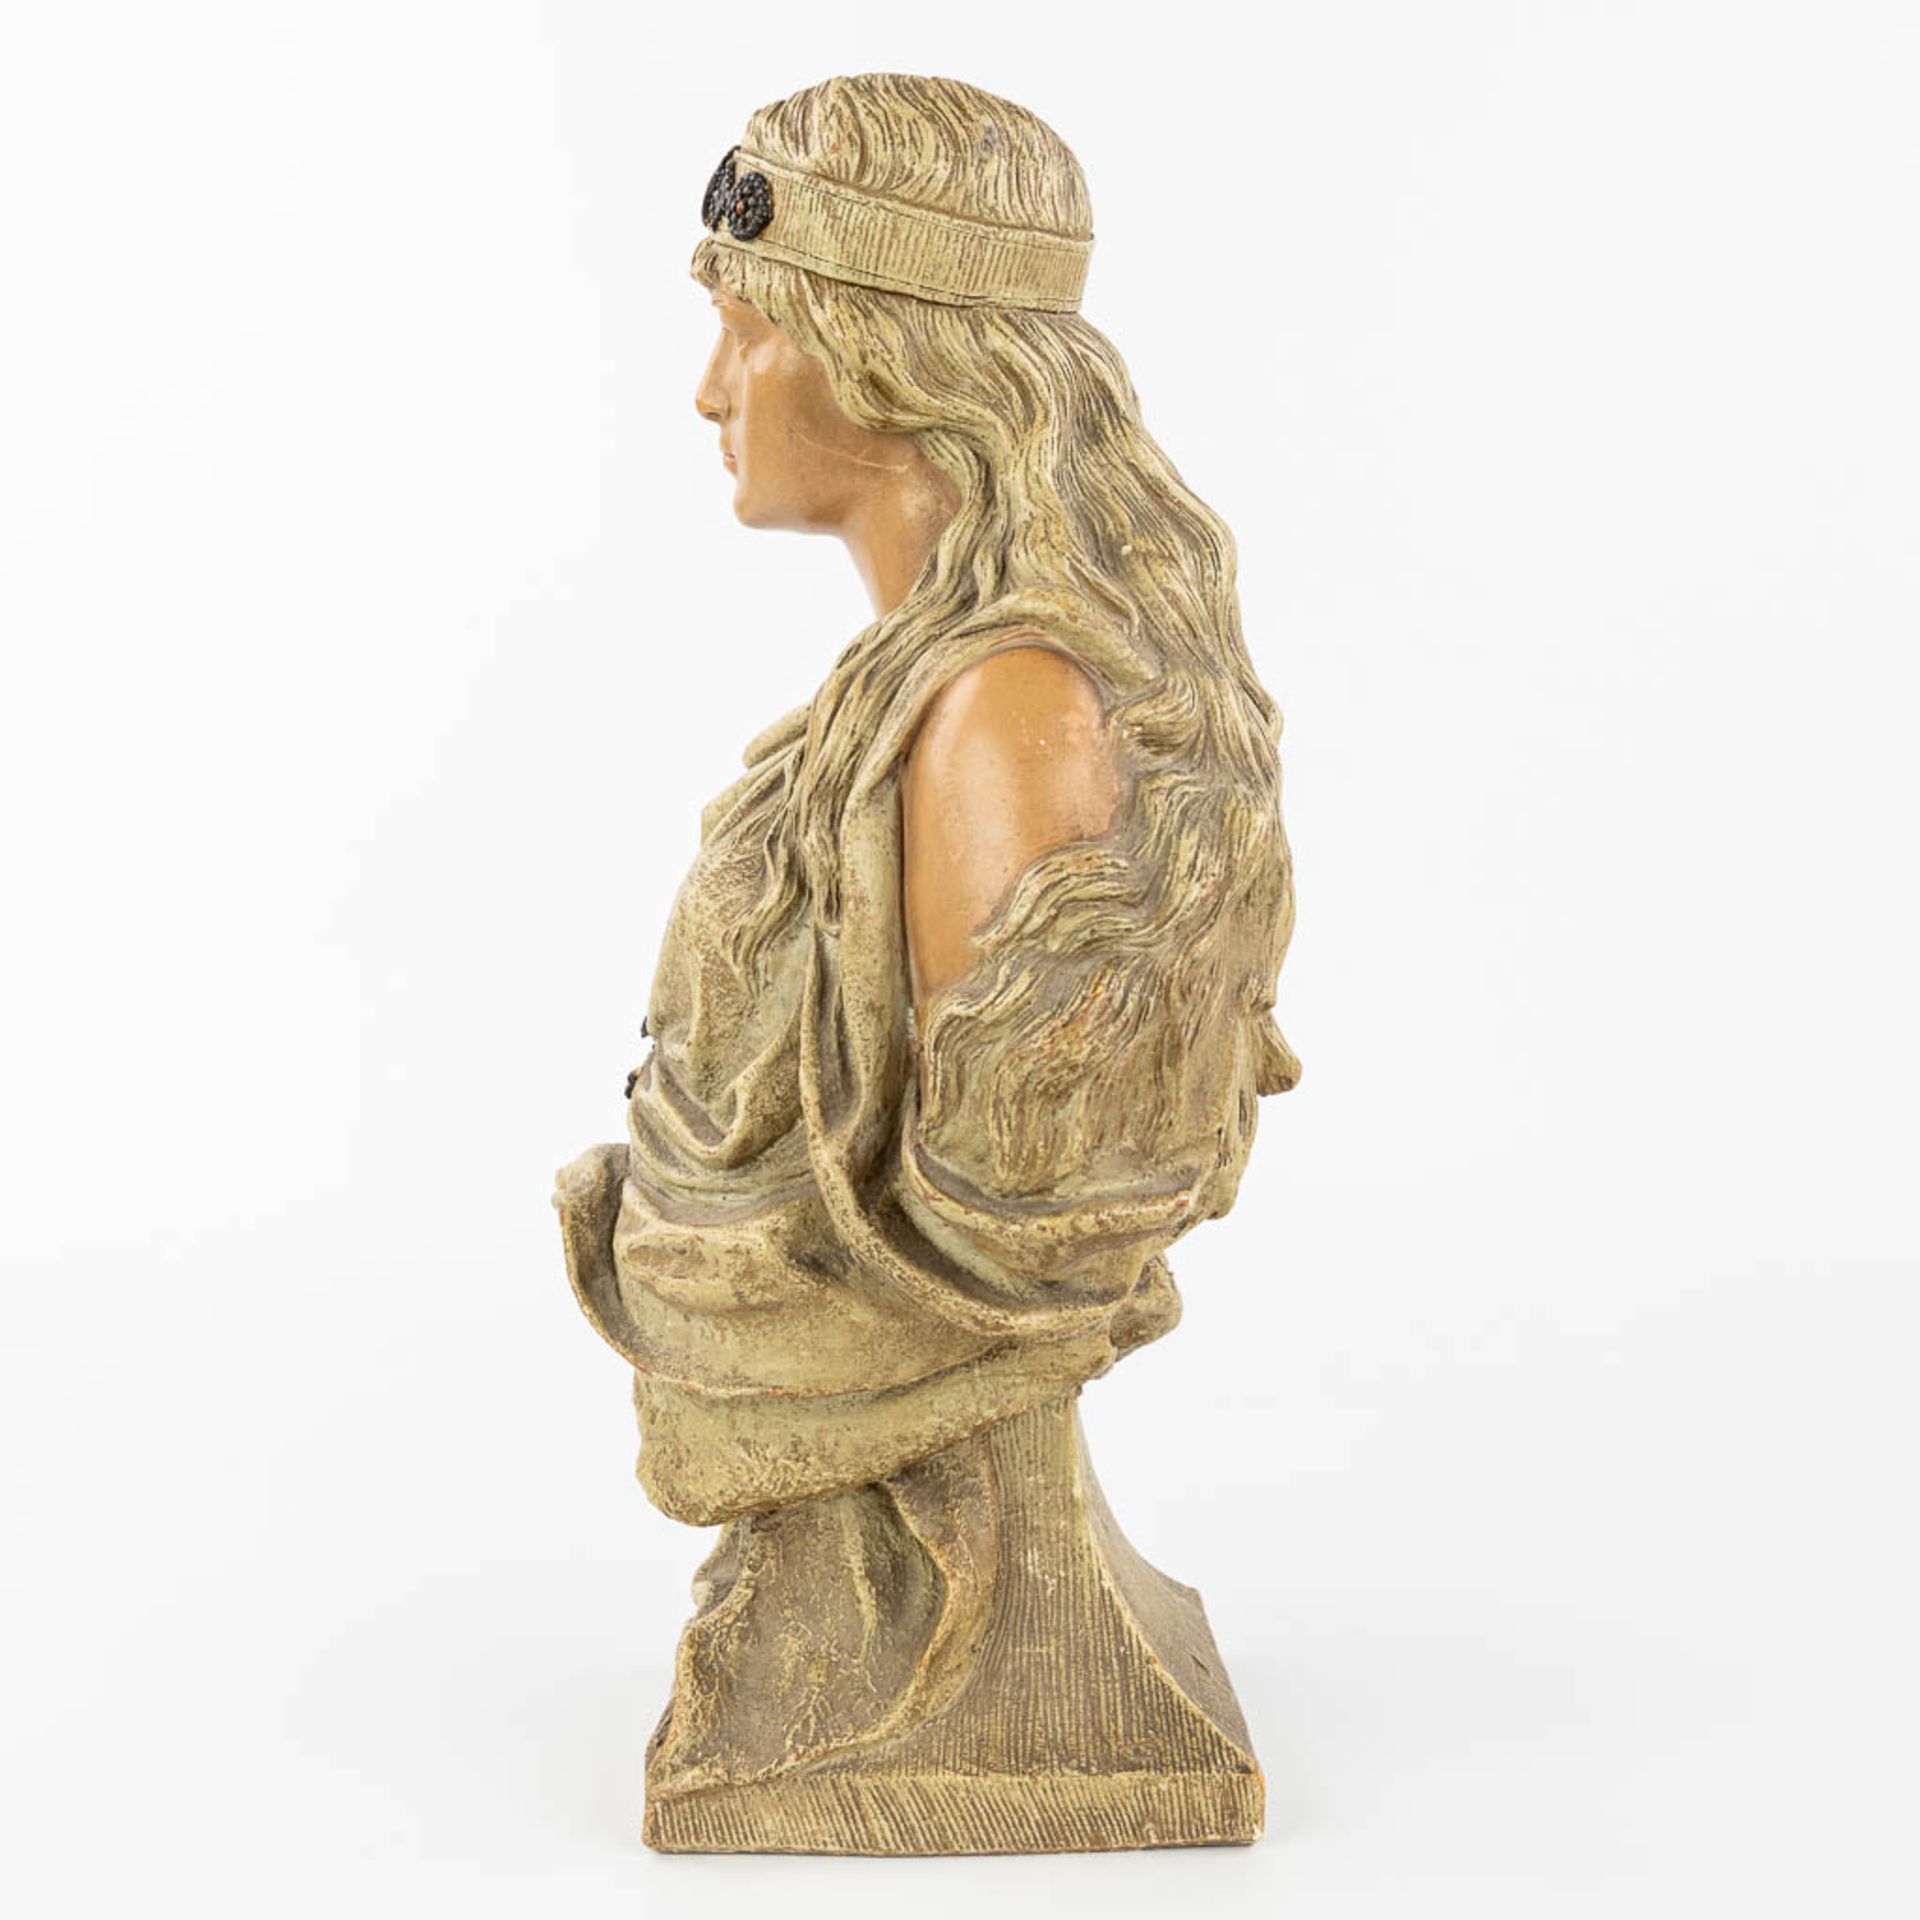 E. TELL (XIX-XX) and Friedrich GOLDSCHEIDER (1845-1897) 'Judith' a buste made of terracotta, for Gol - Image 2 of 14